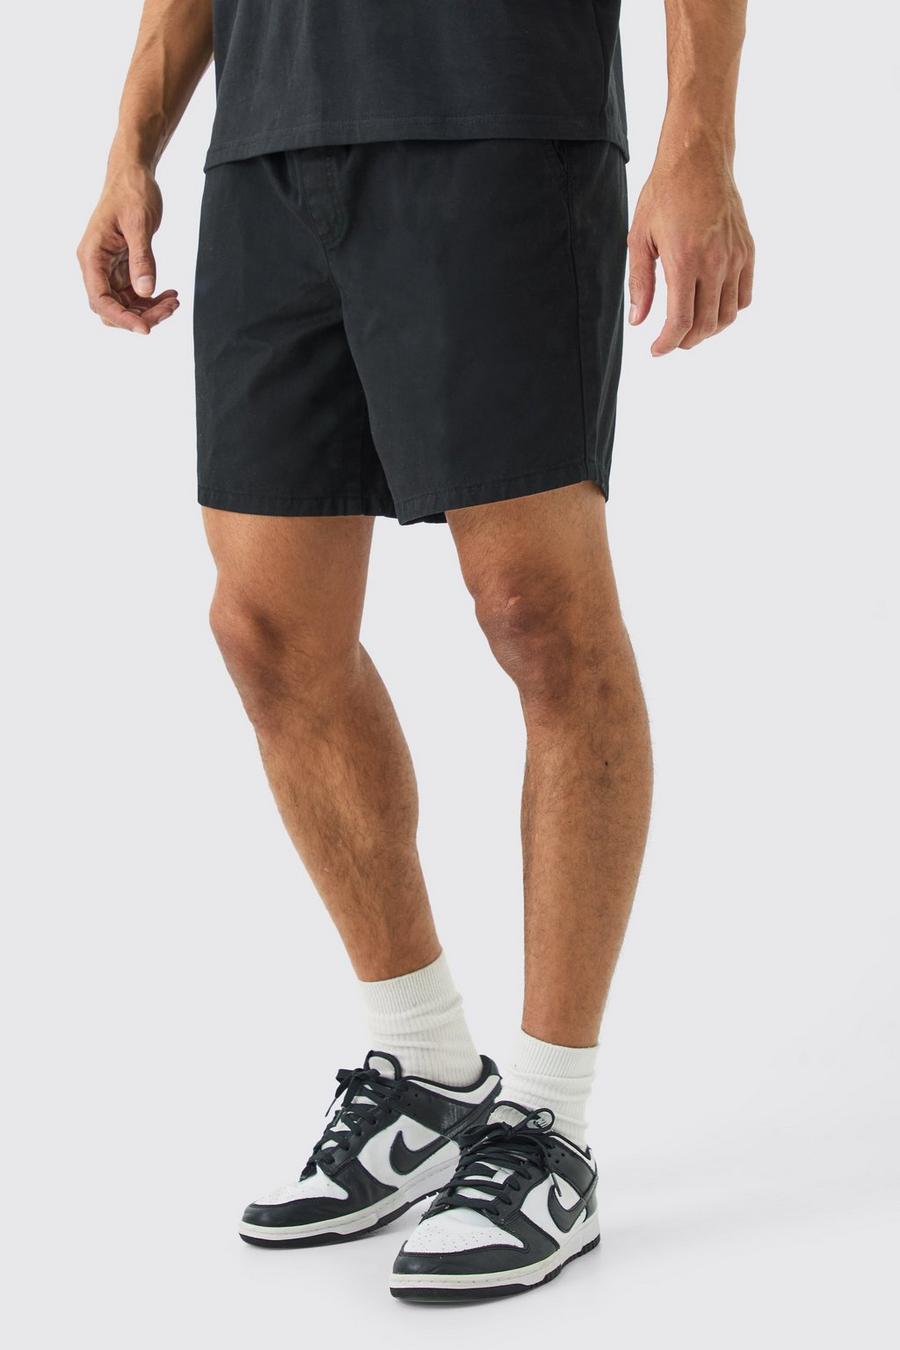 Kurze lockere Shorts in Schwarz, Black